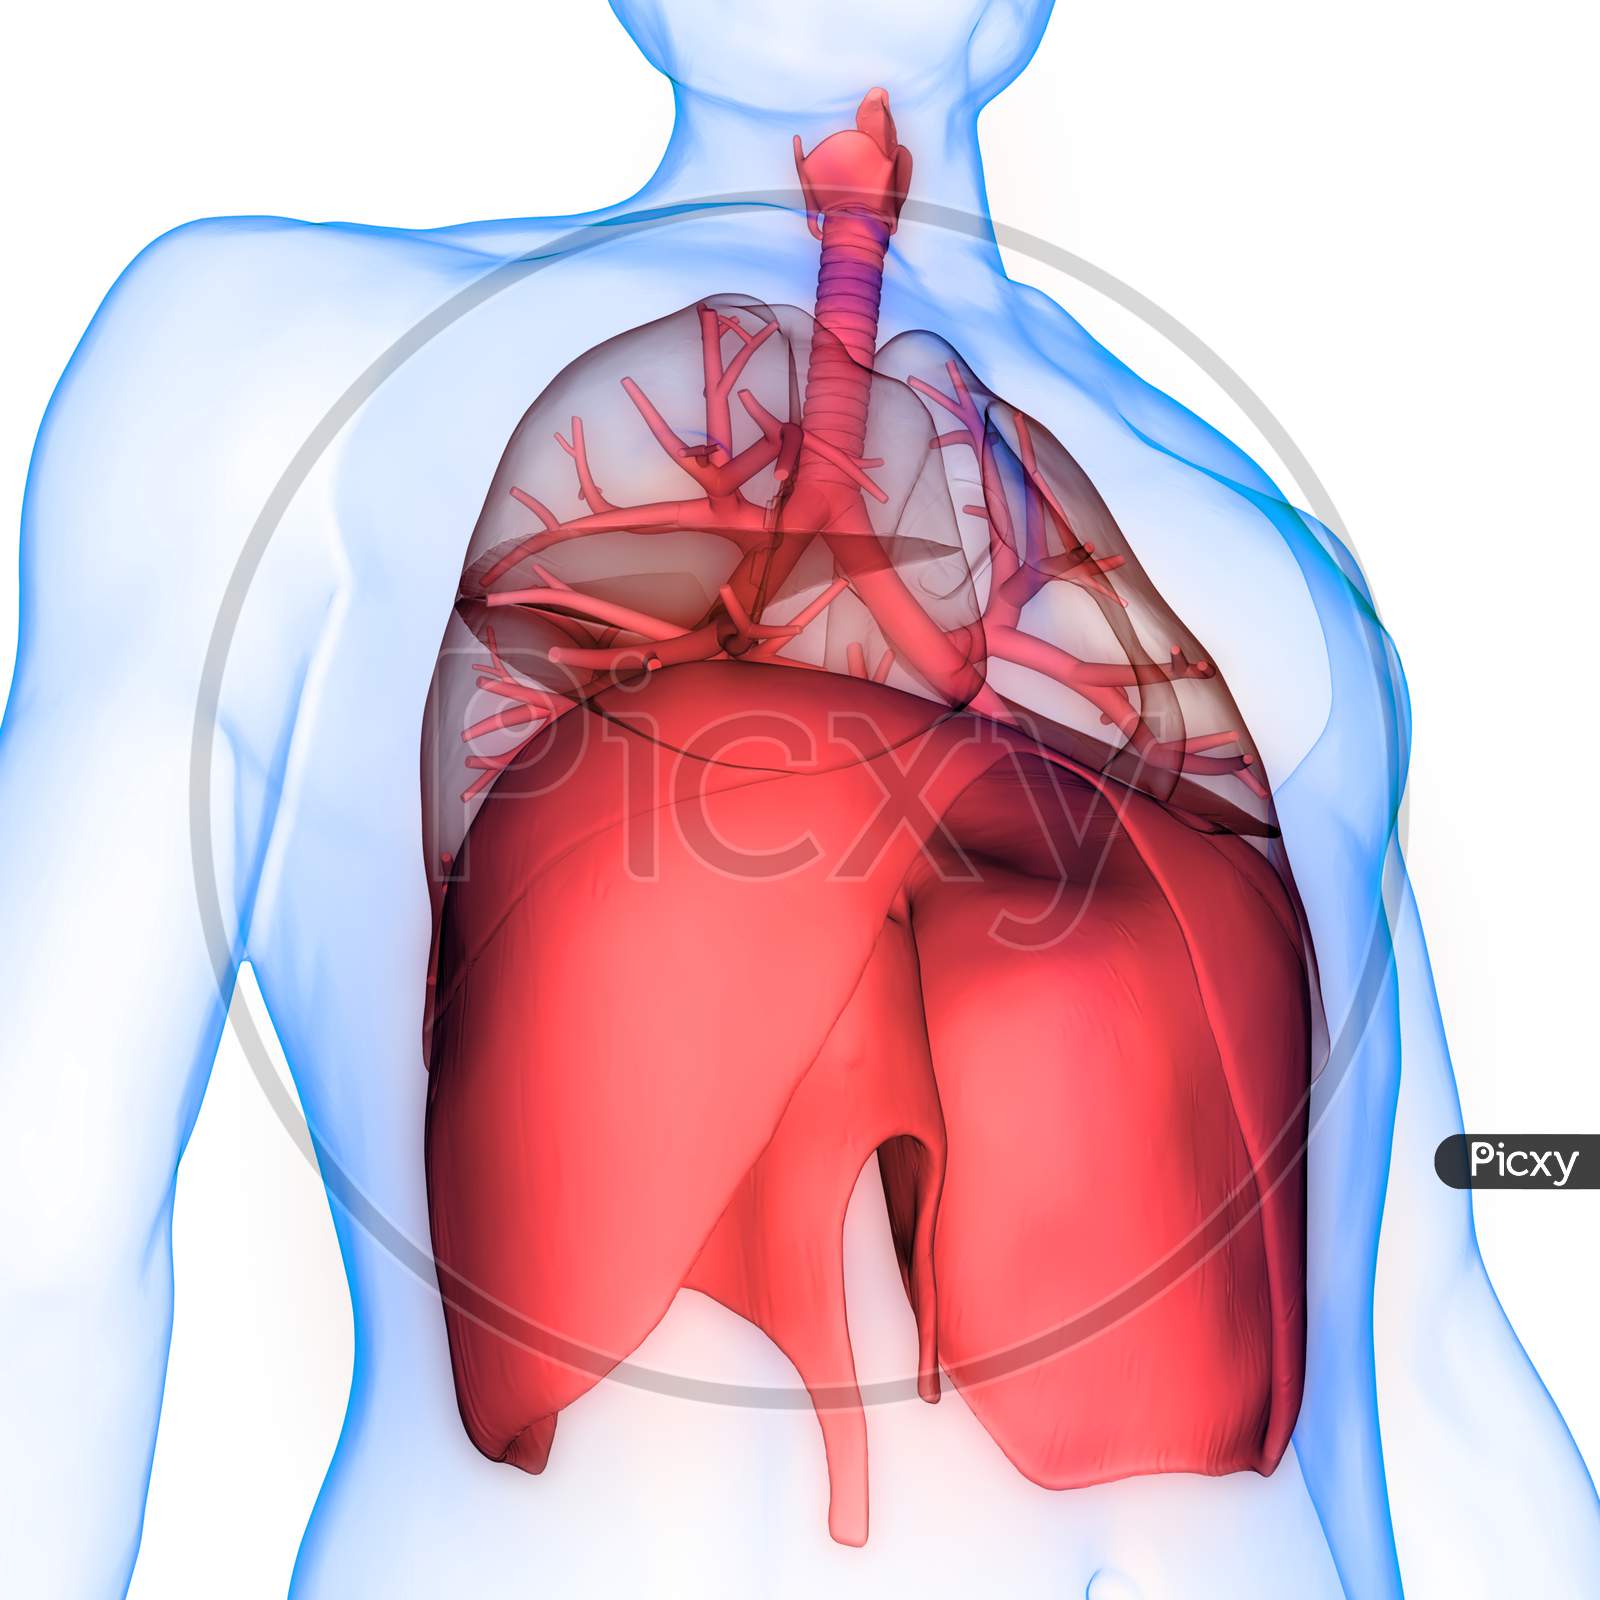 respiratory system diaphragm